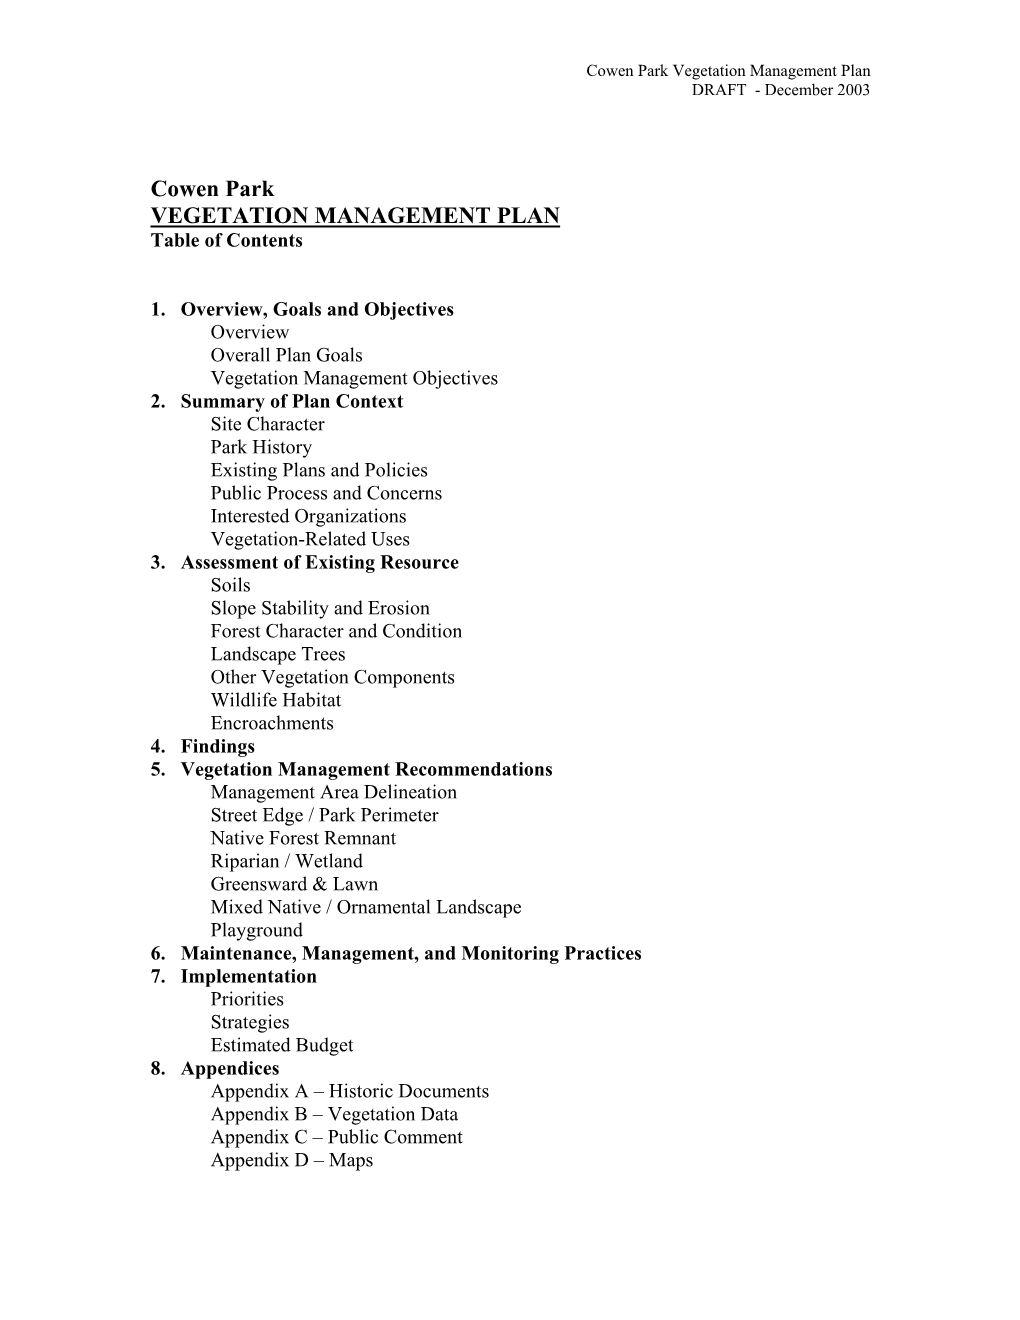 Cowen Park Vegetation Management Plan DRAFT - December 2003